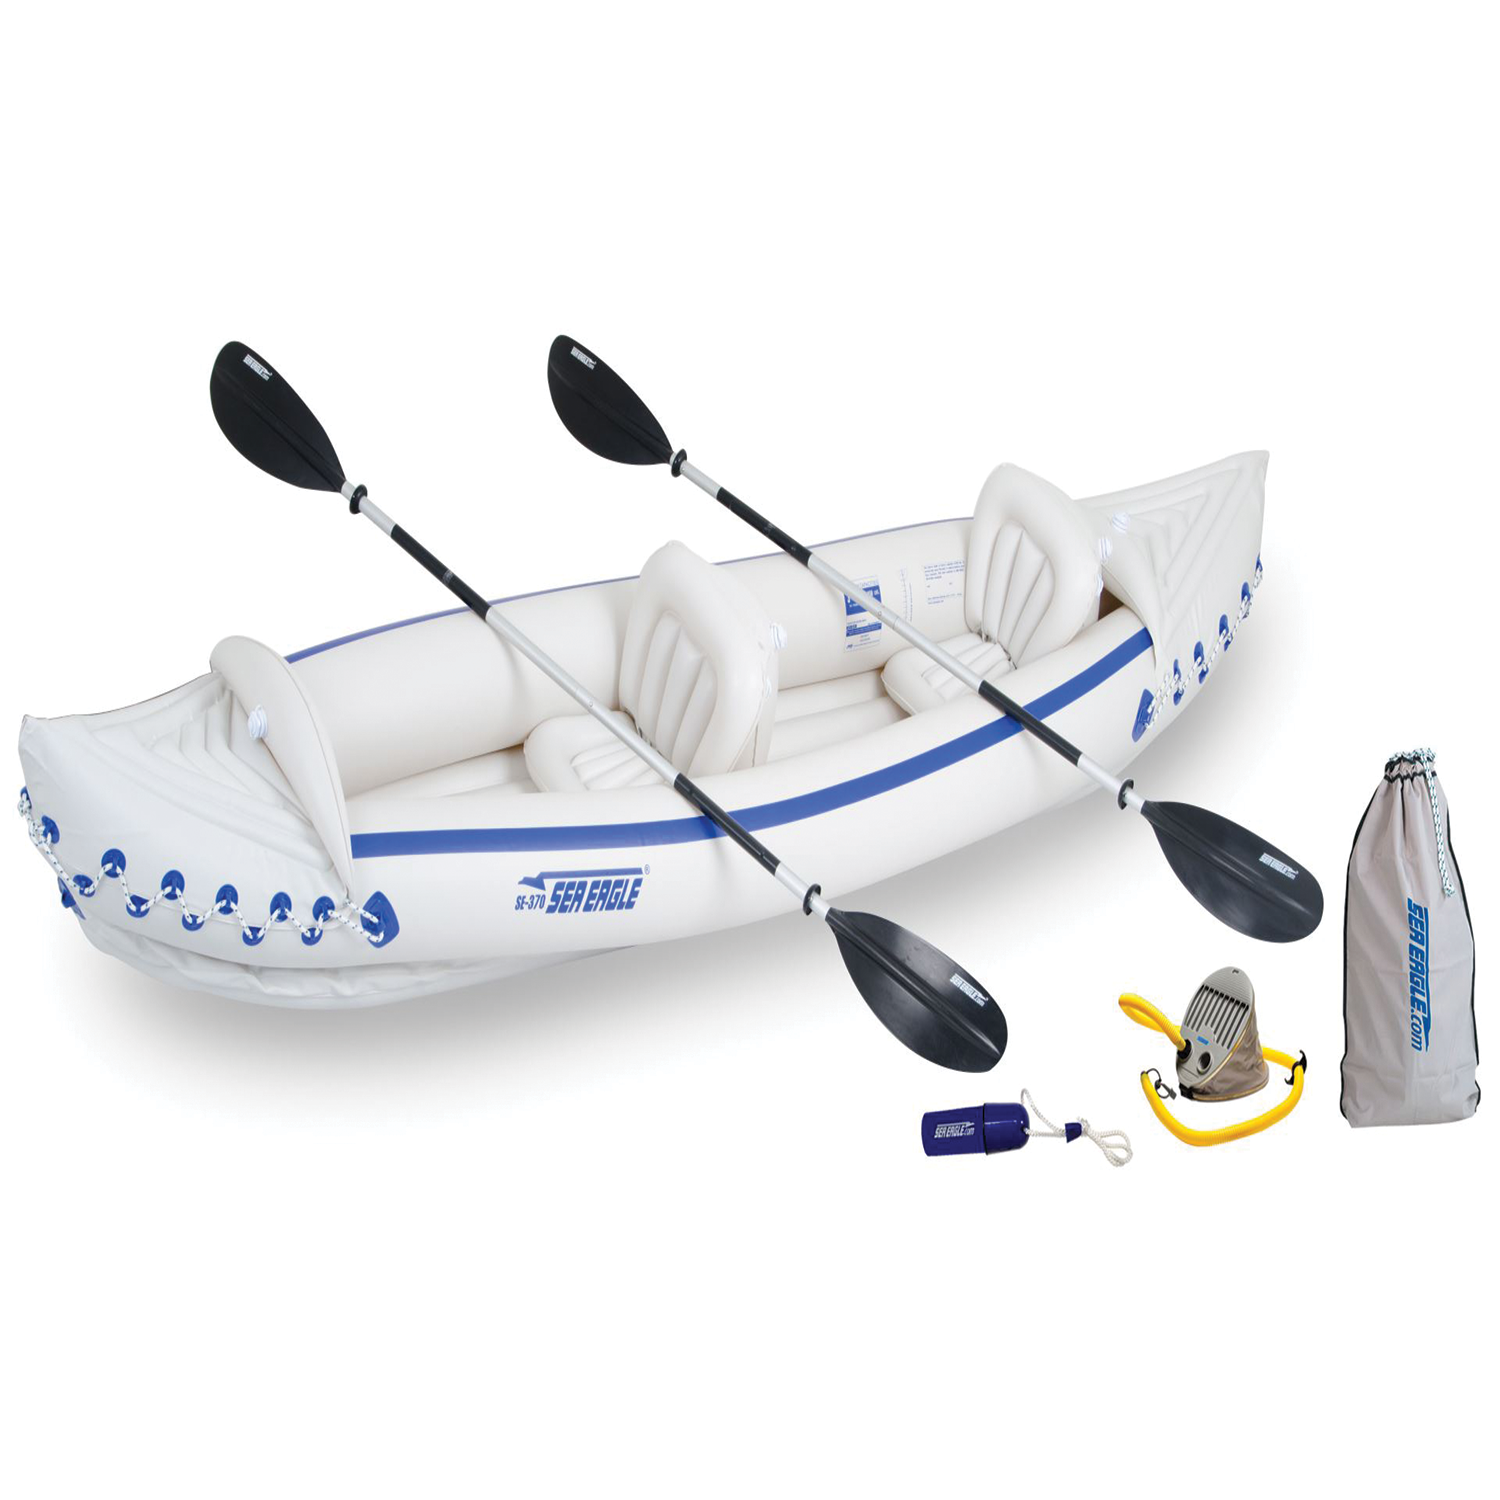 Sea Eagle 370 Deluxe Inflatable Kayak